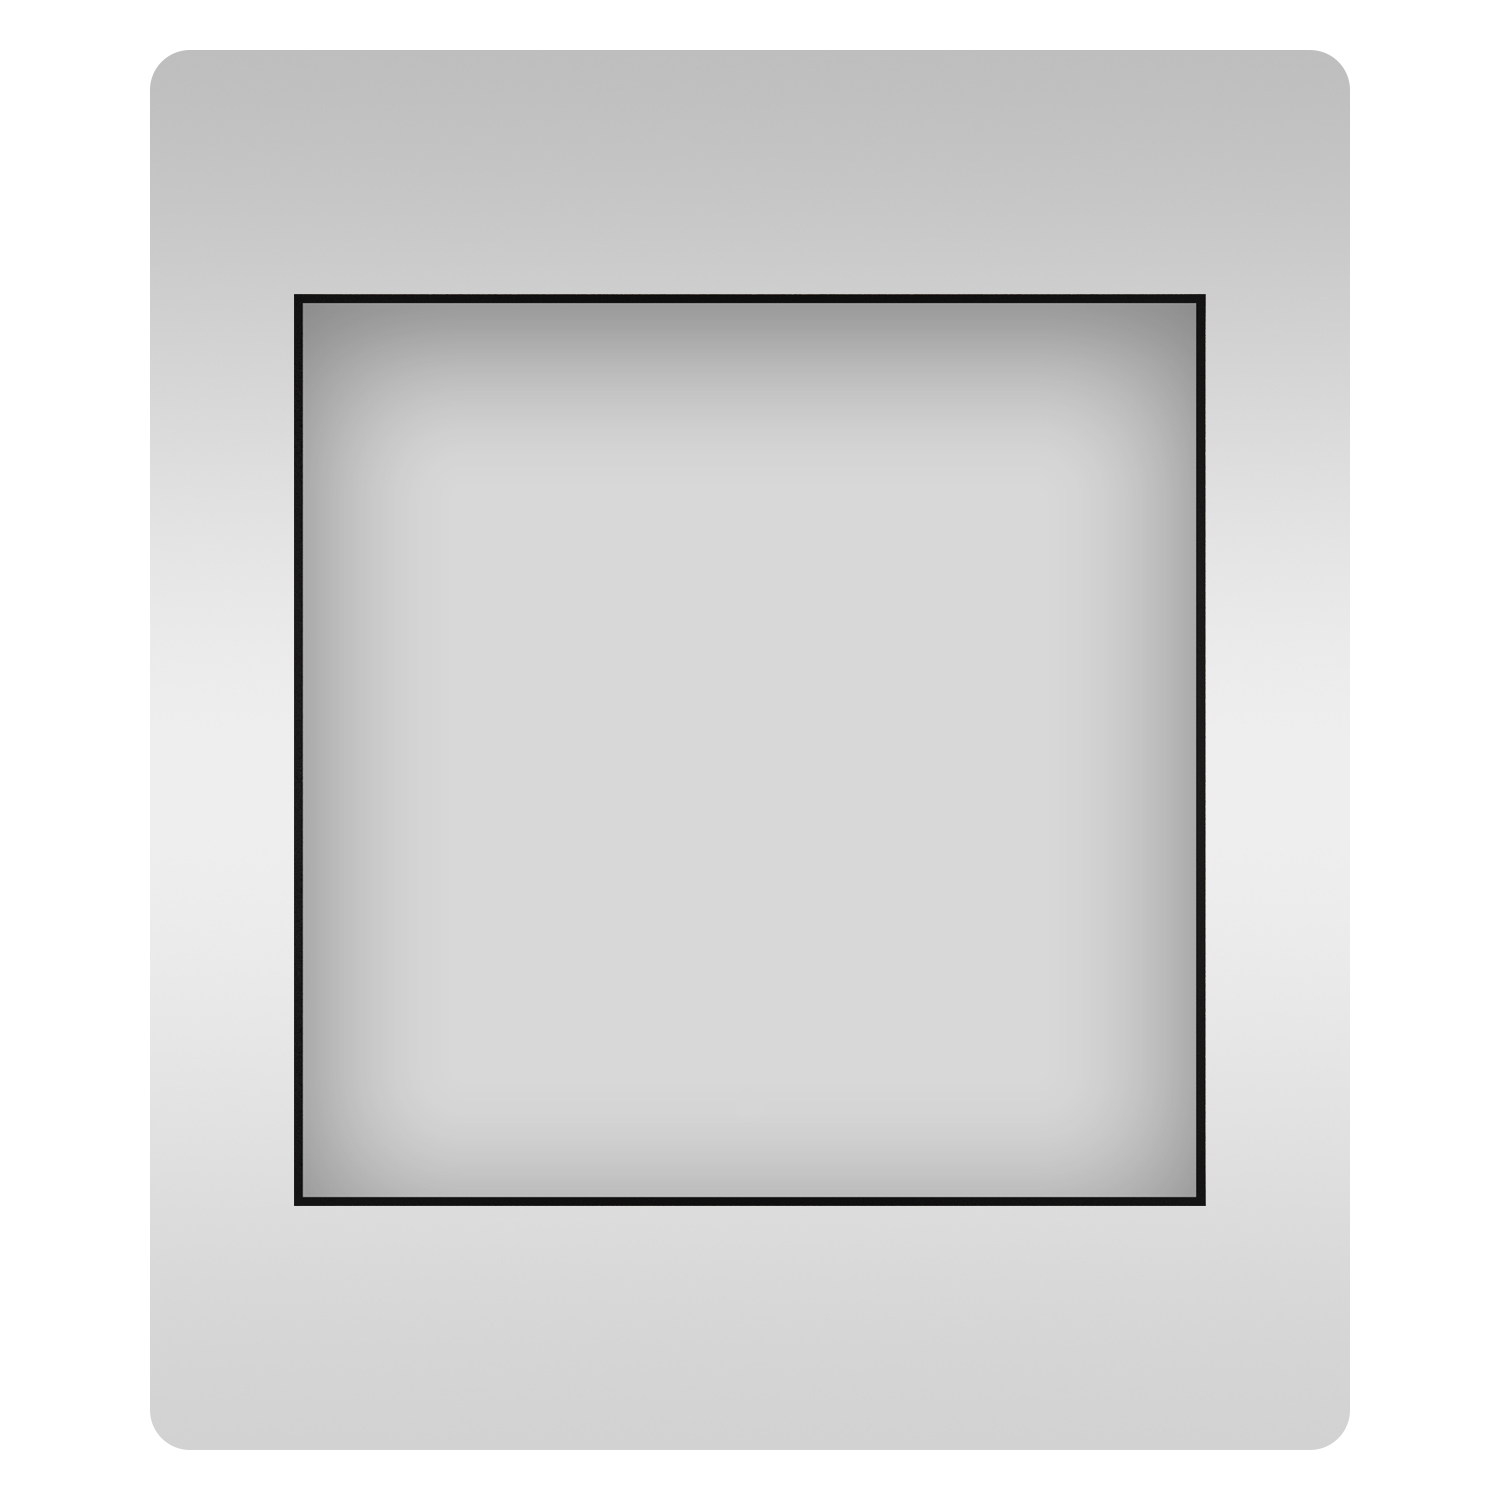 Влагостойкое квадратное зеркало Wellsee 7 Rays' Spectrum 172200280, 50х50 см